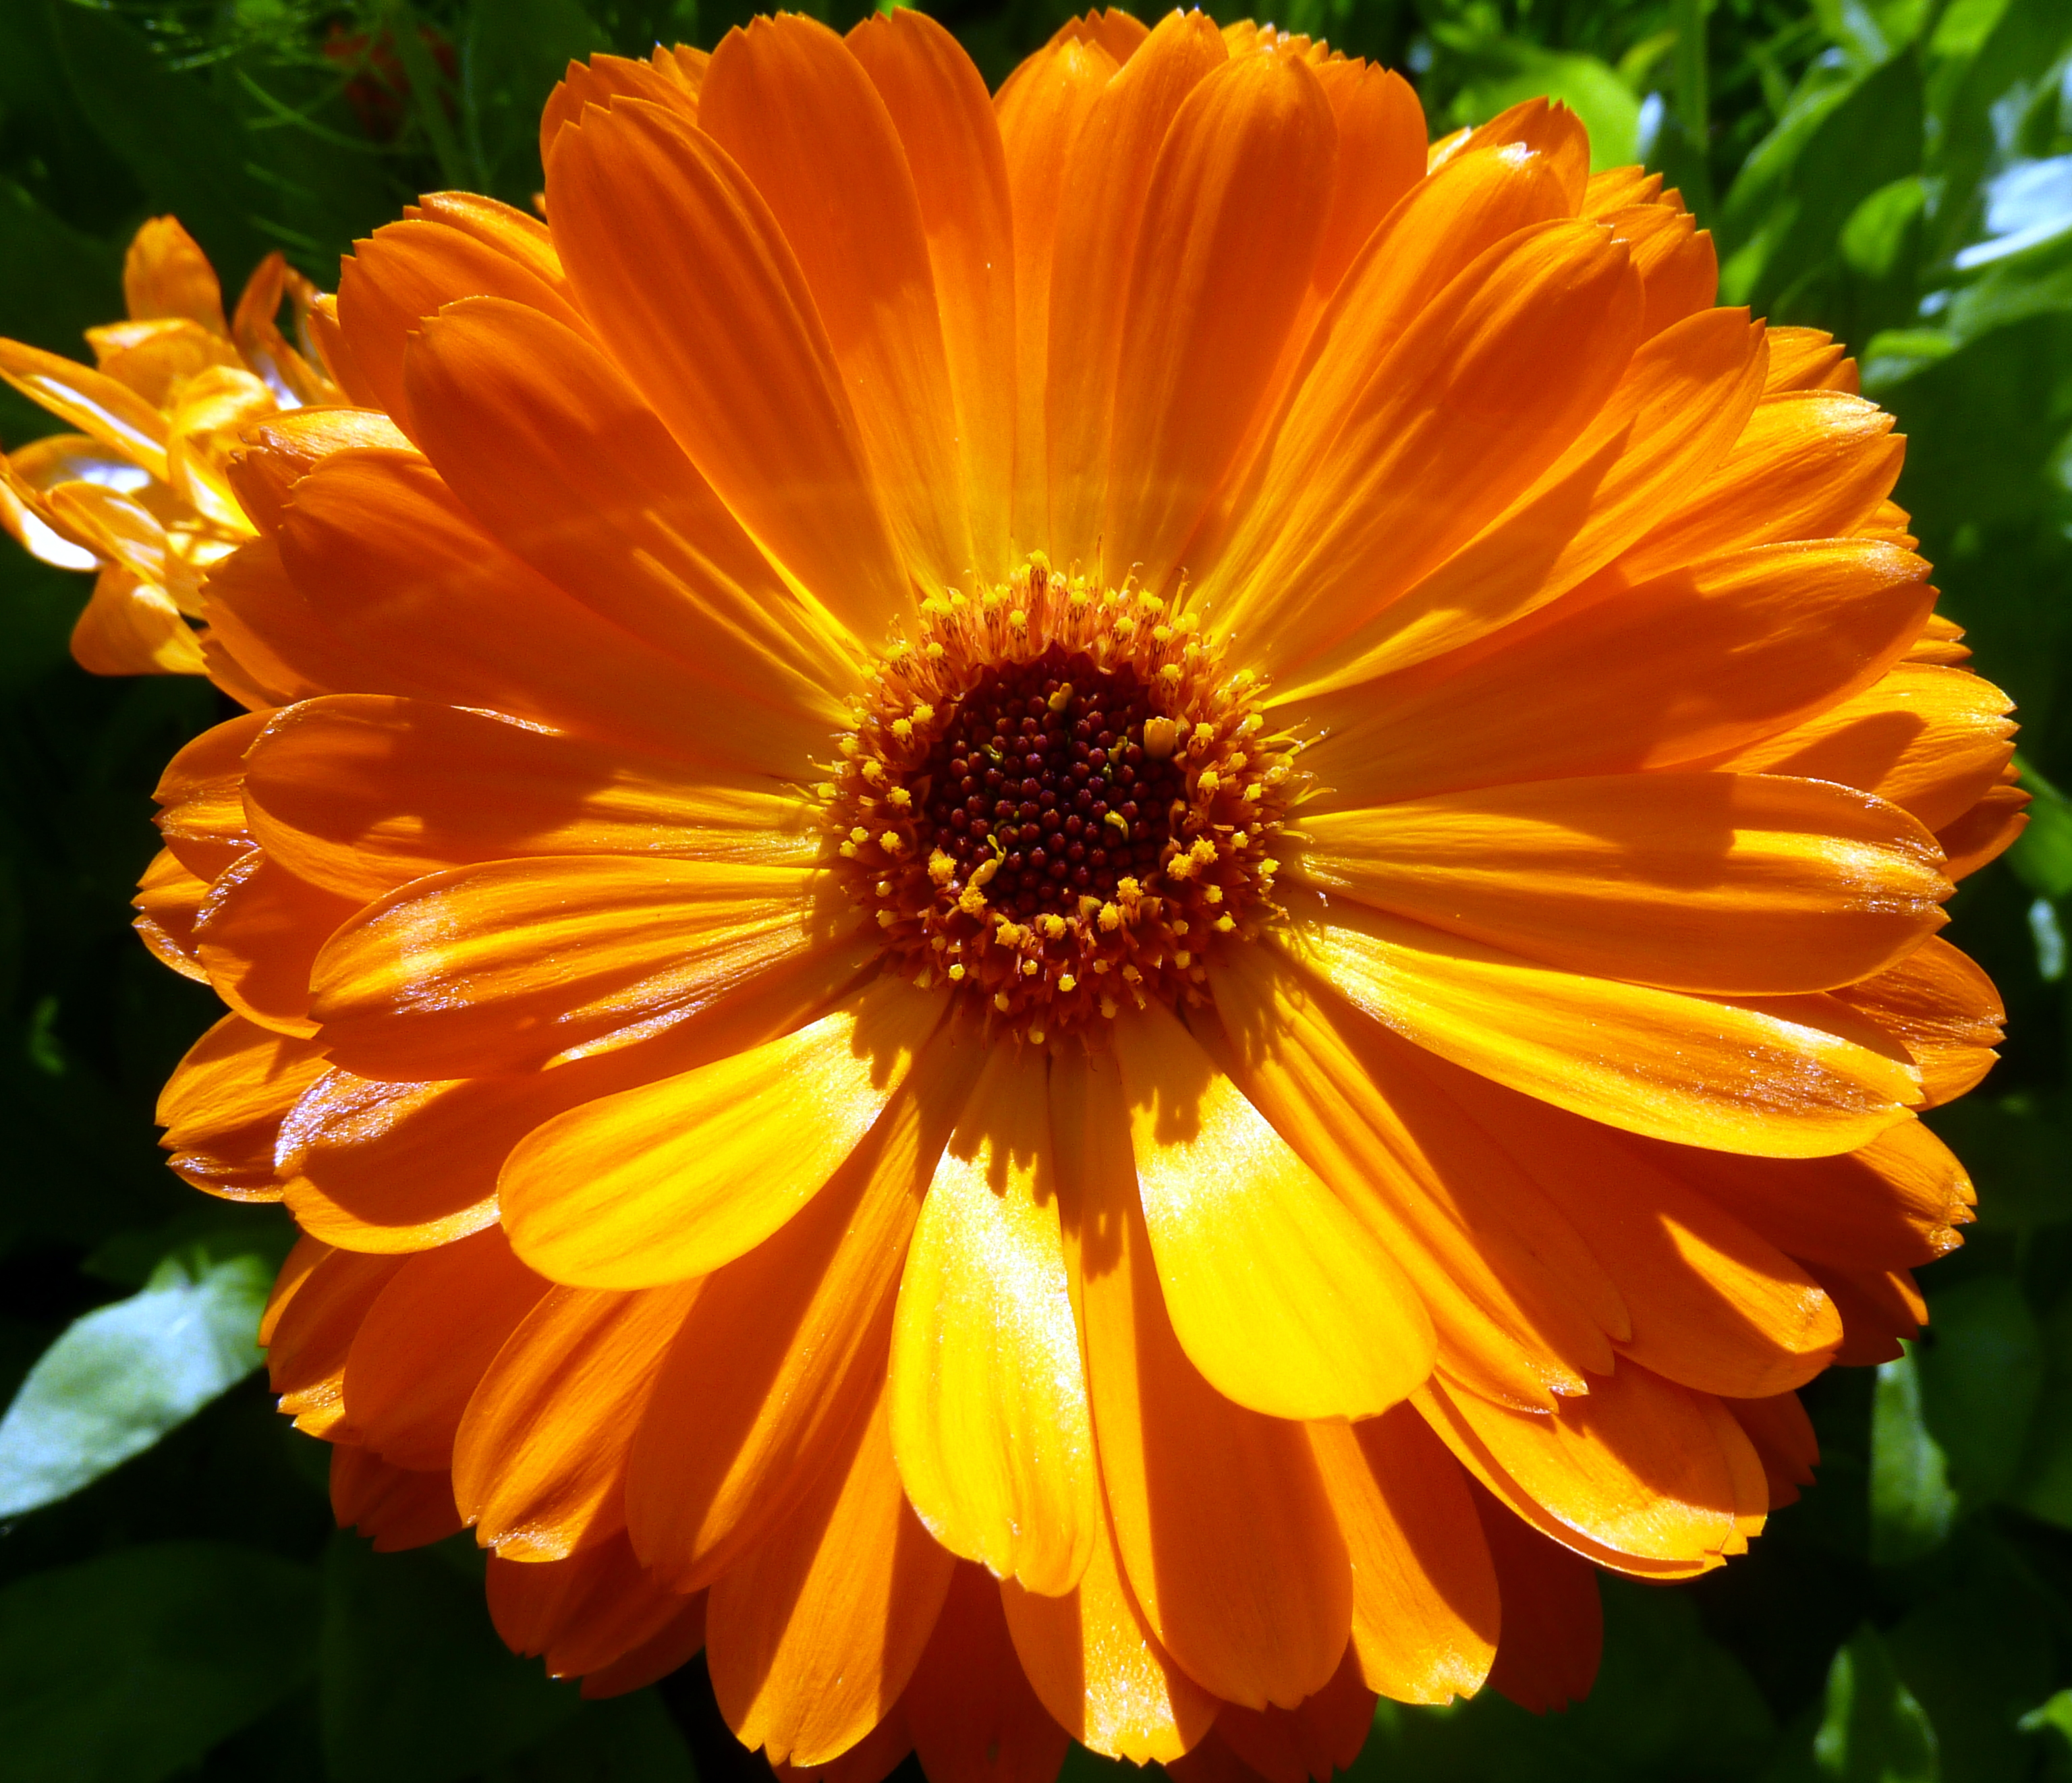 File:Orange flower (7433774546).jpg - Wikimedia Commons